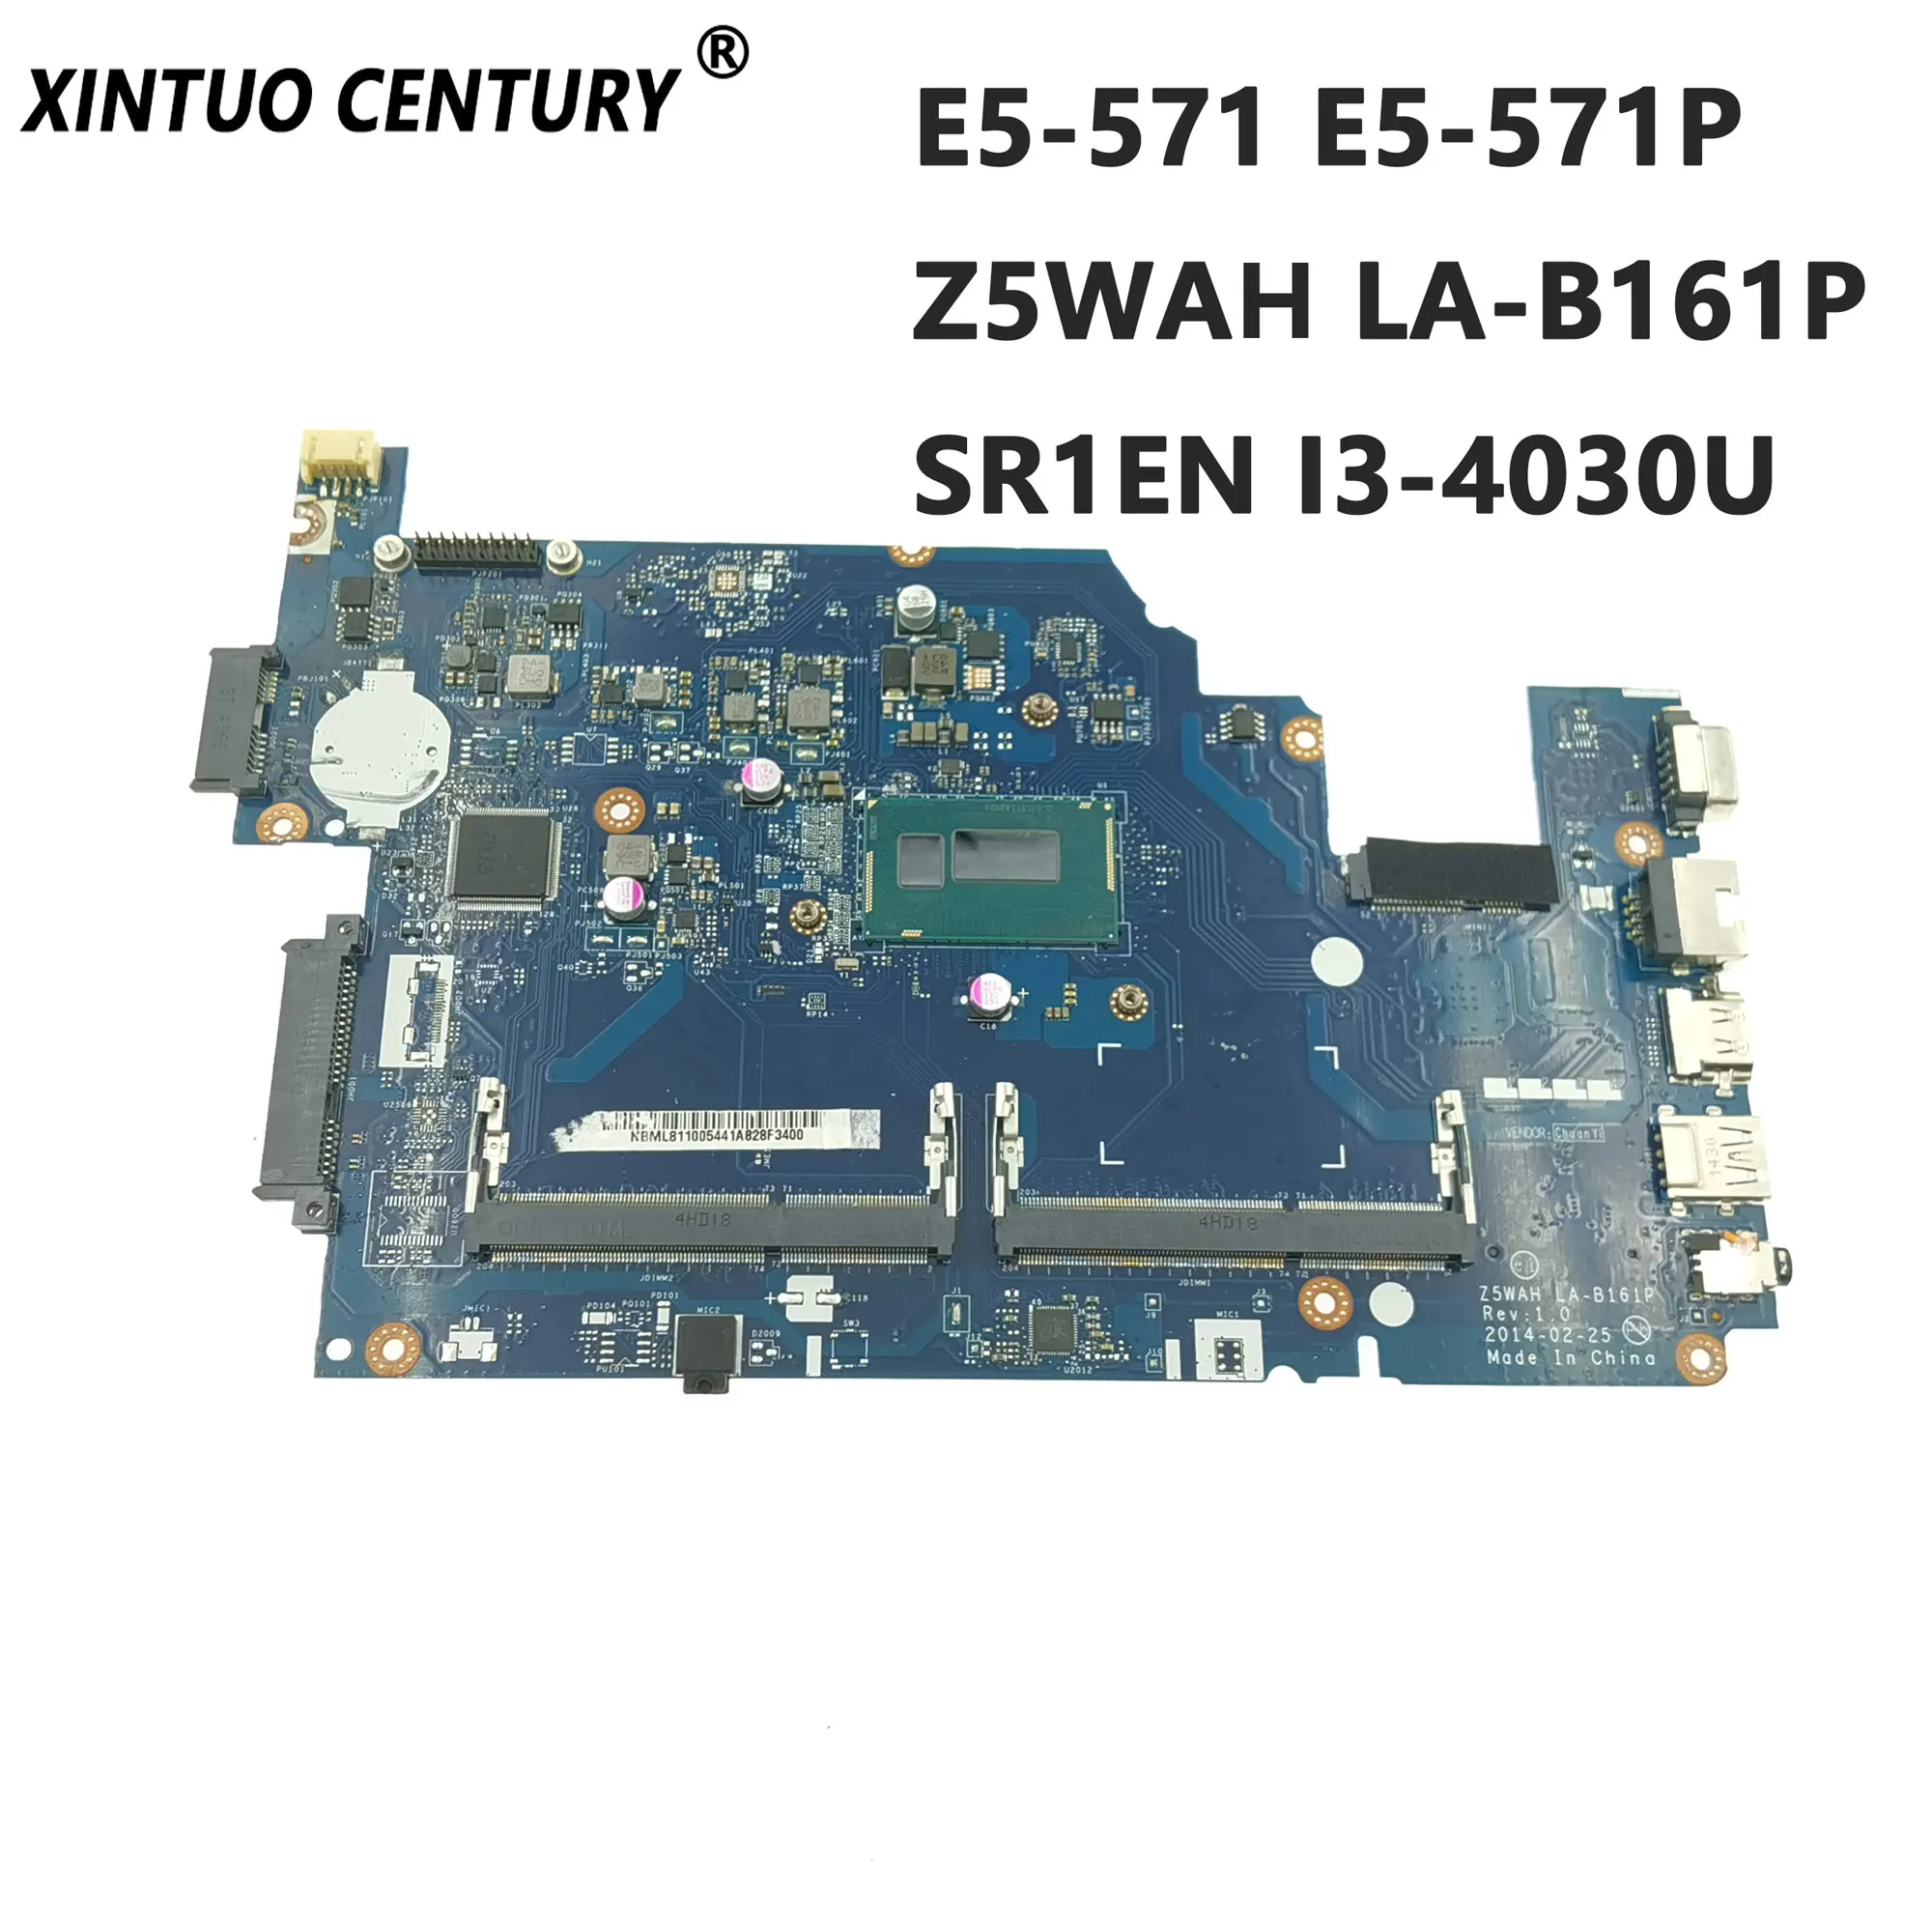 

Z5WAH LA-B161P Motherboard for Acer Aspire E5-571 E5-571P Laptop Motherboard with SR1EN I3-4030U CPU HM86 DDR3 100% Tested